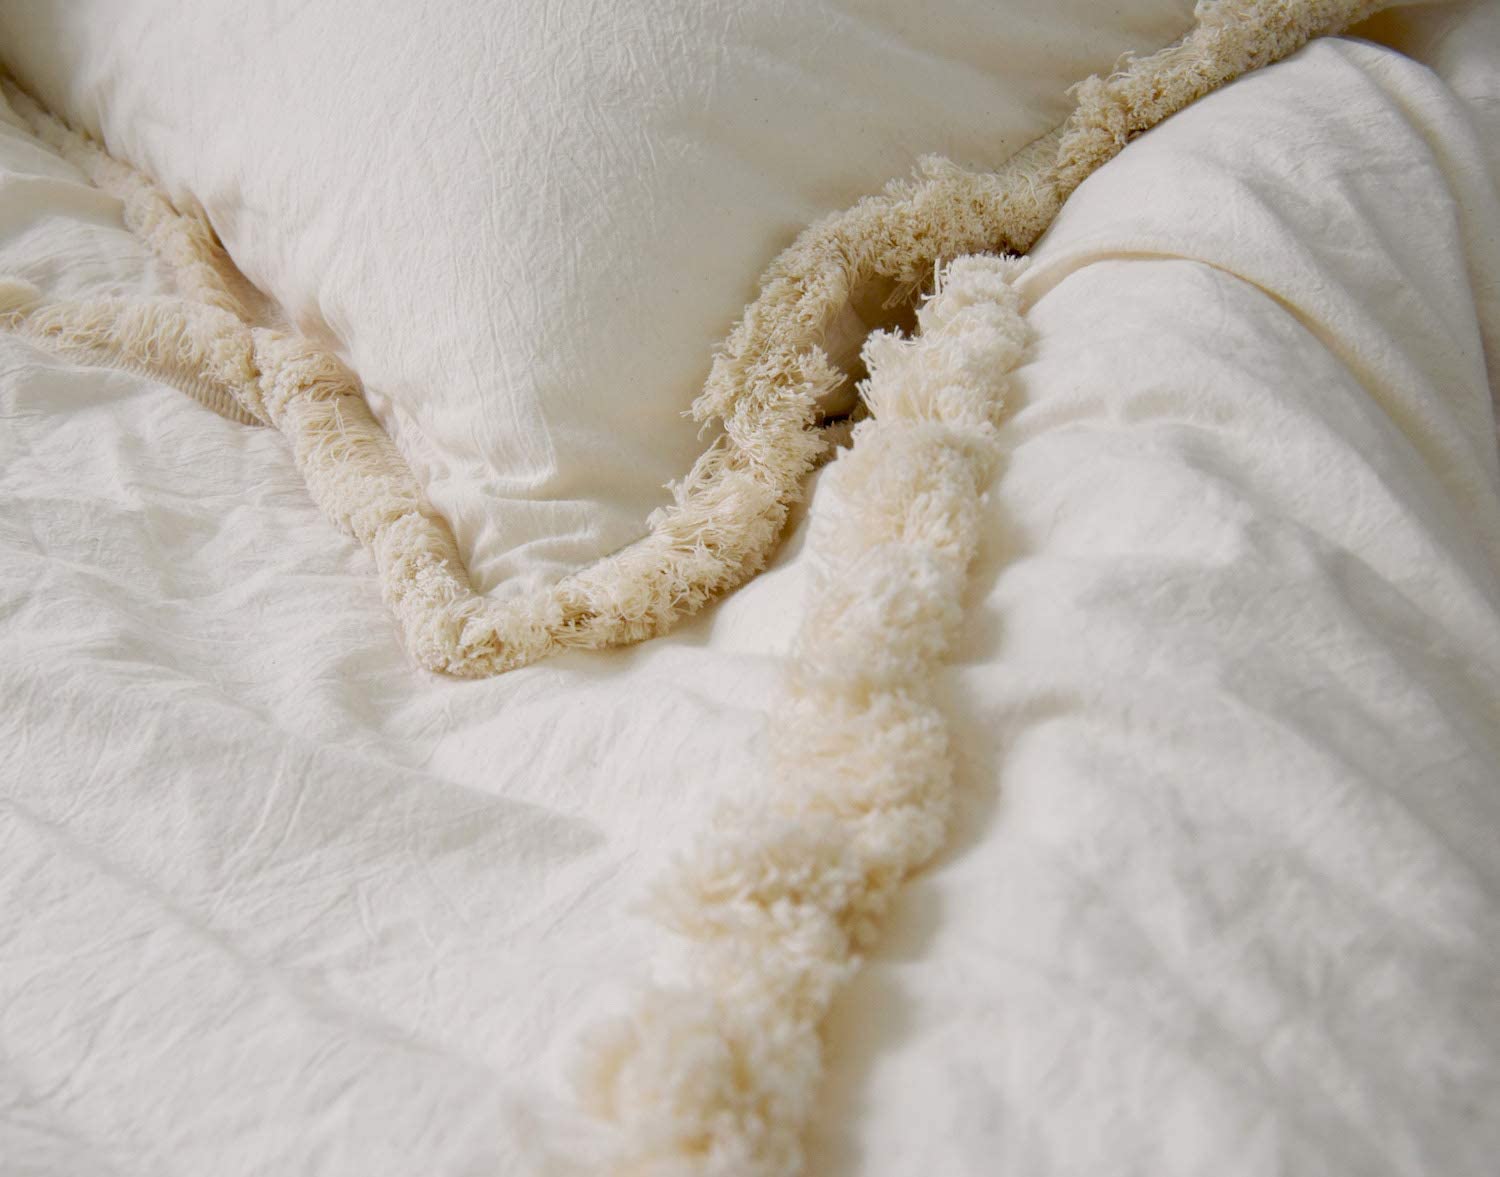 Flber Ivory Duvet Cover Tufted Boho Bedding Comforter Queen Size, 86in x90in  eBay